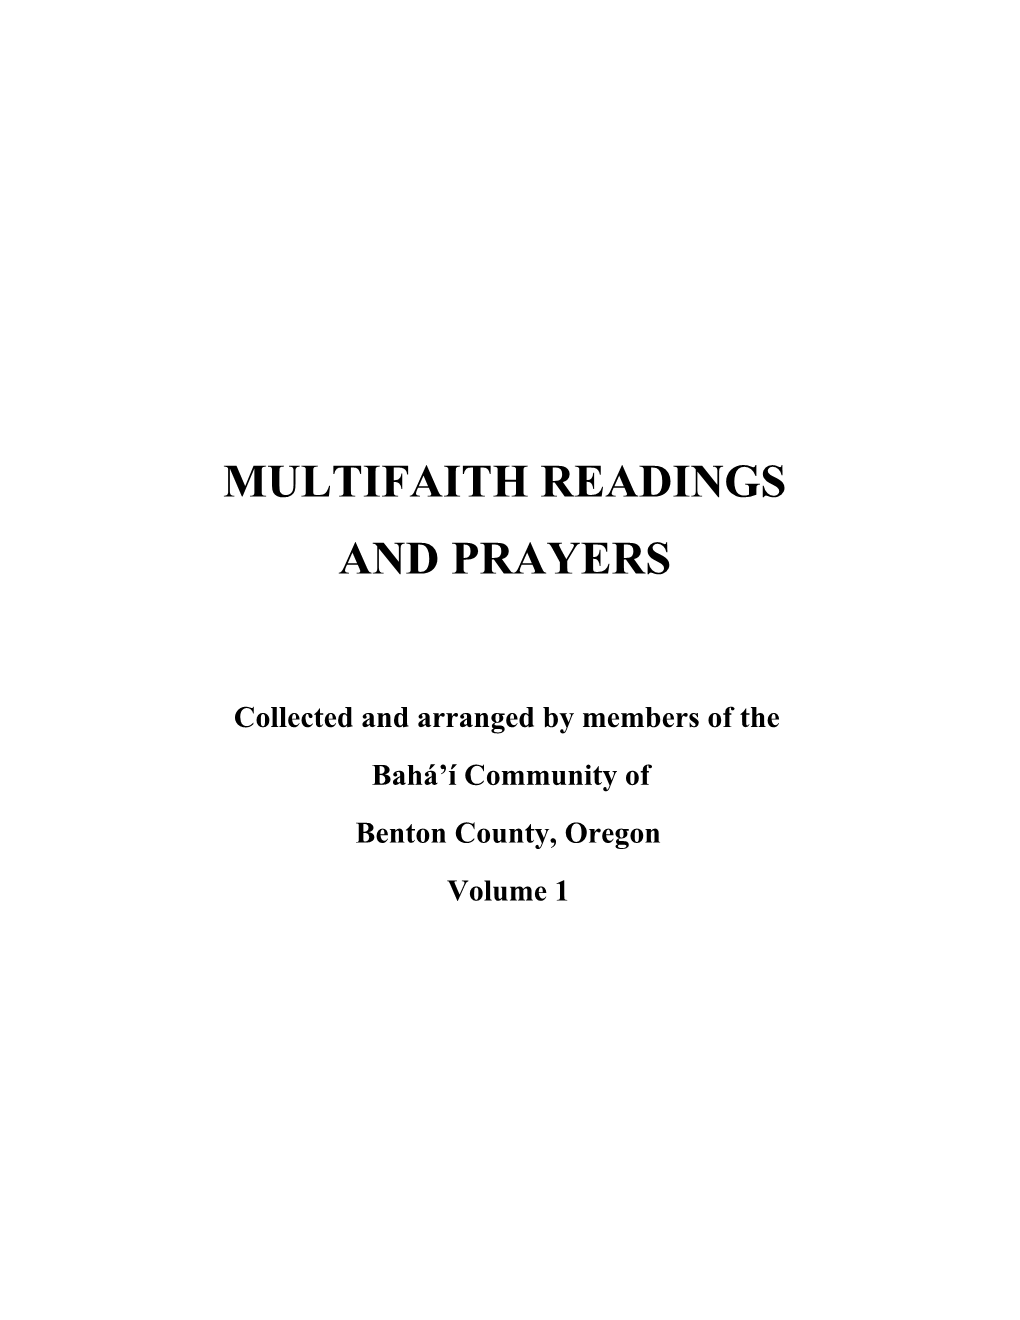 MULTIFAITH READINGS and PRAYERS Volume 1